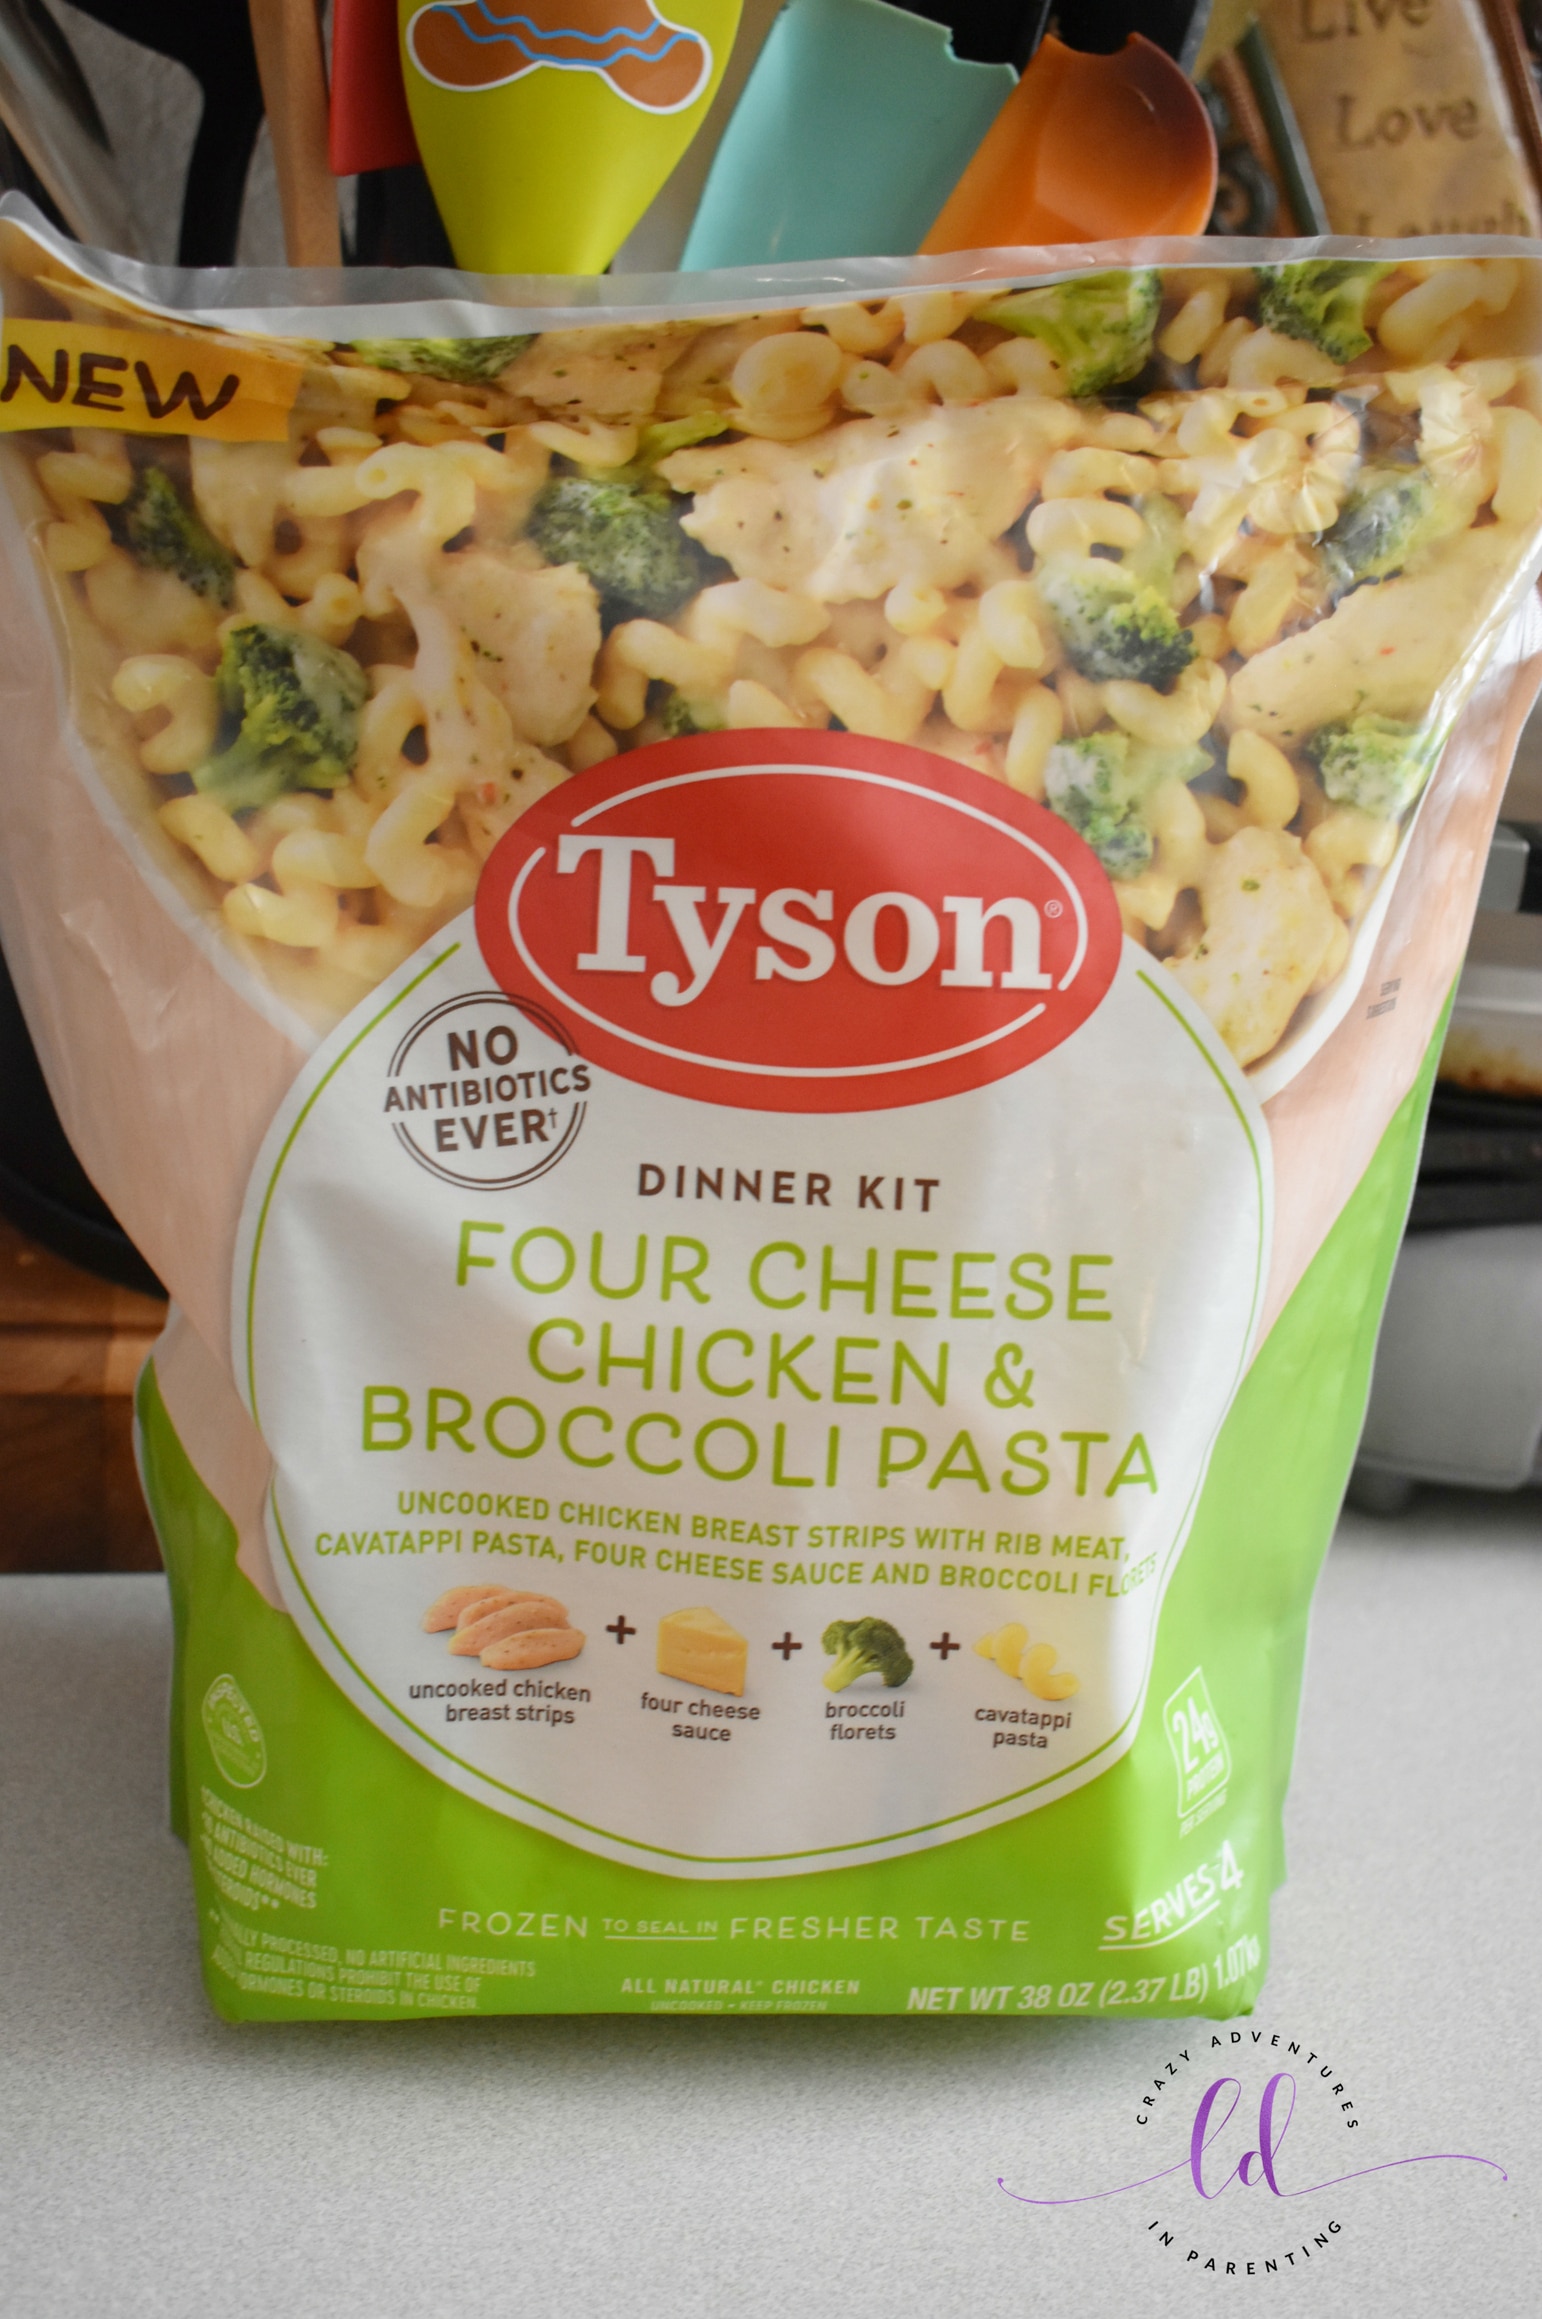 Tyson Four Cheese Chicken & Broccoli Pasta Frozen Dinner Kit